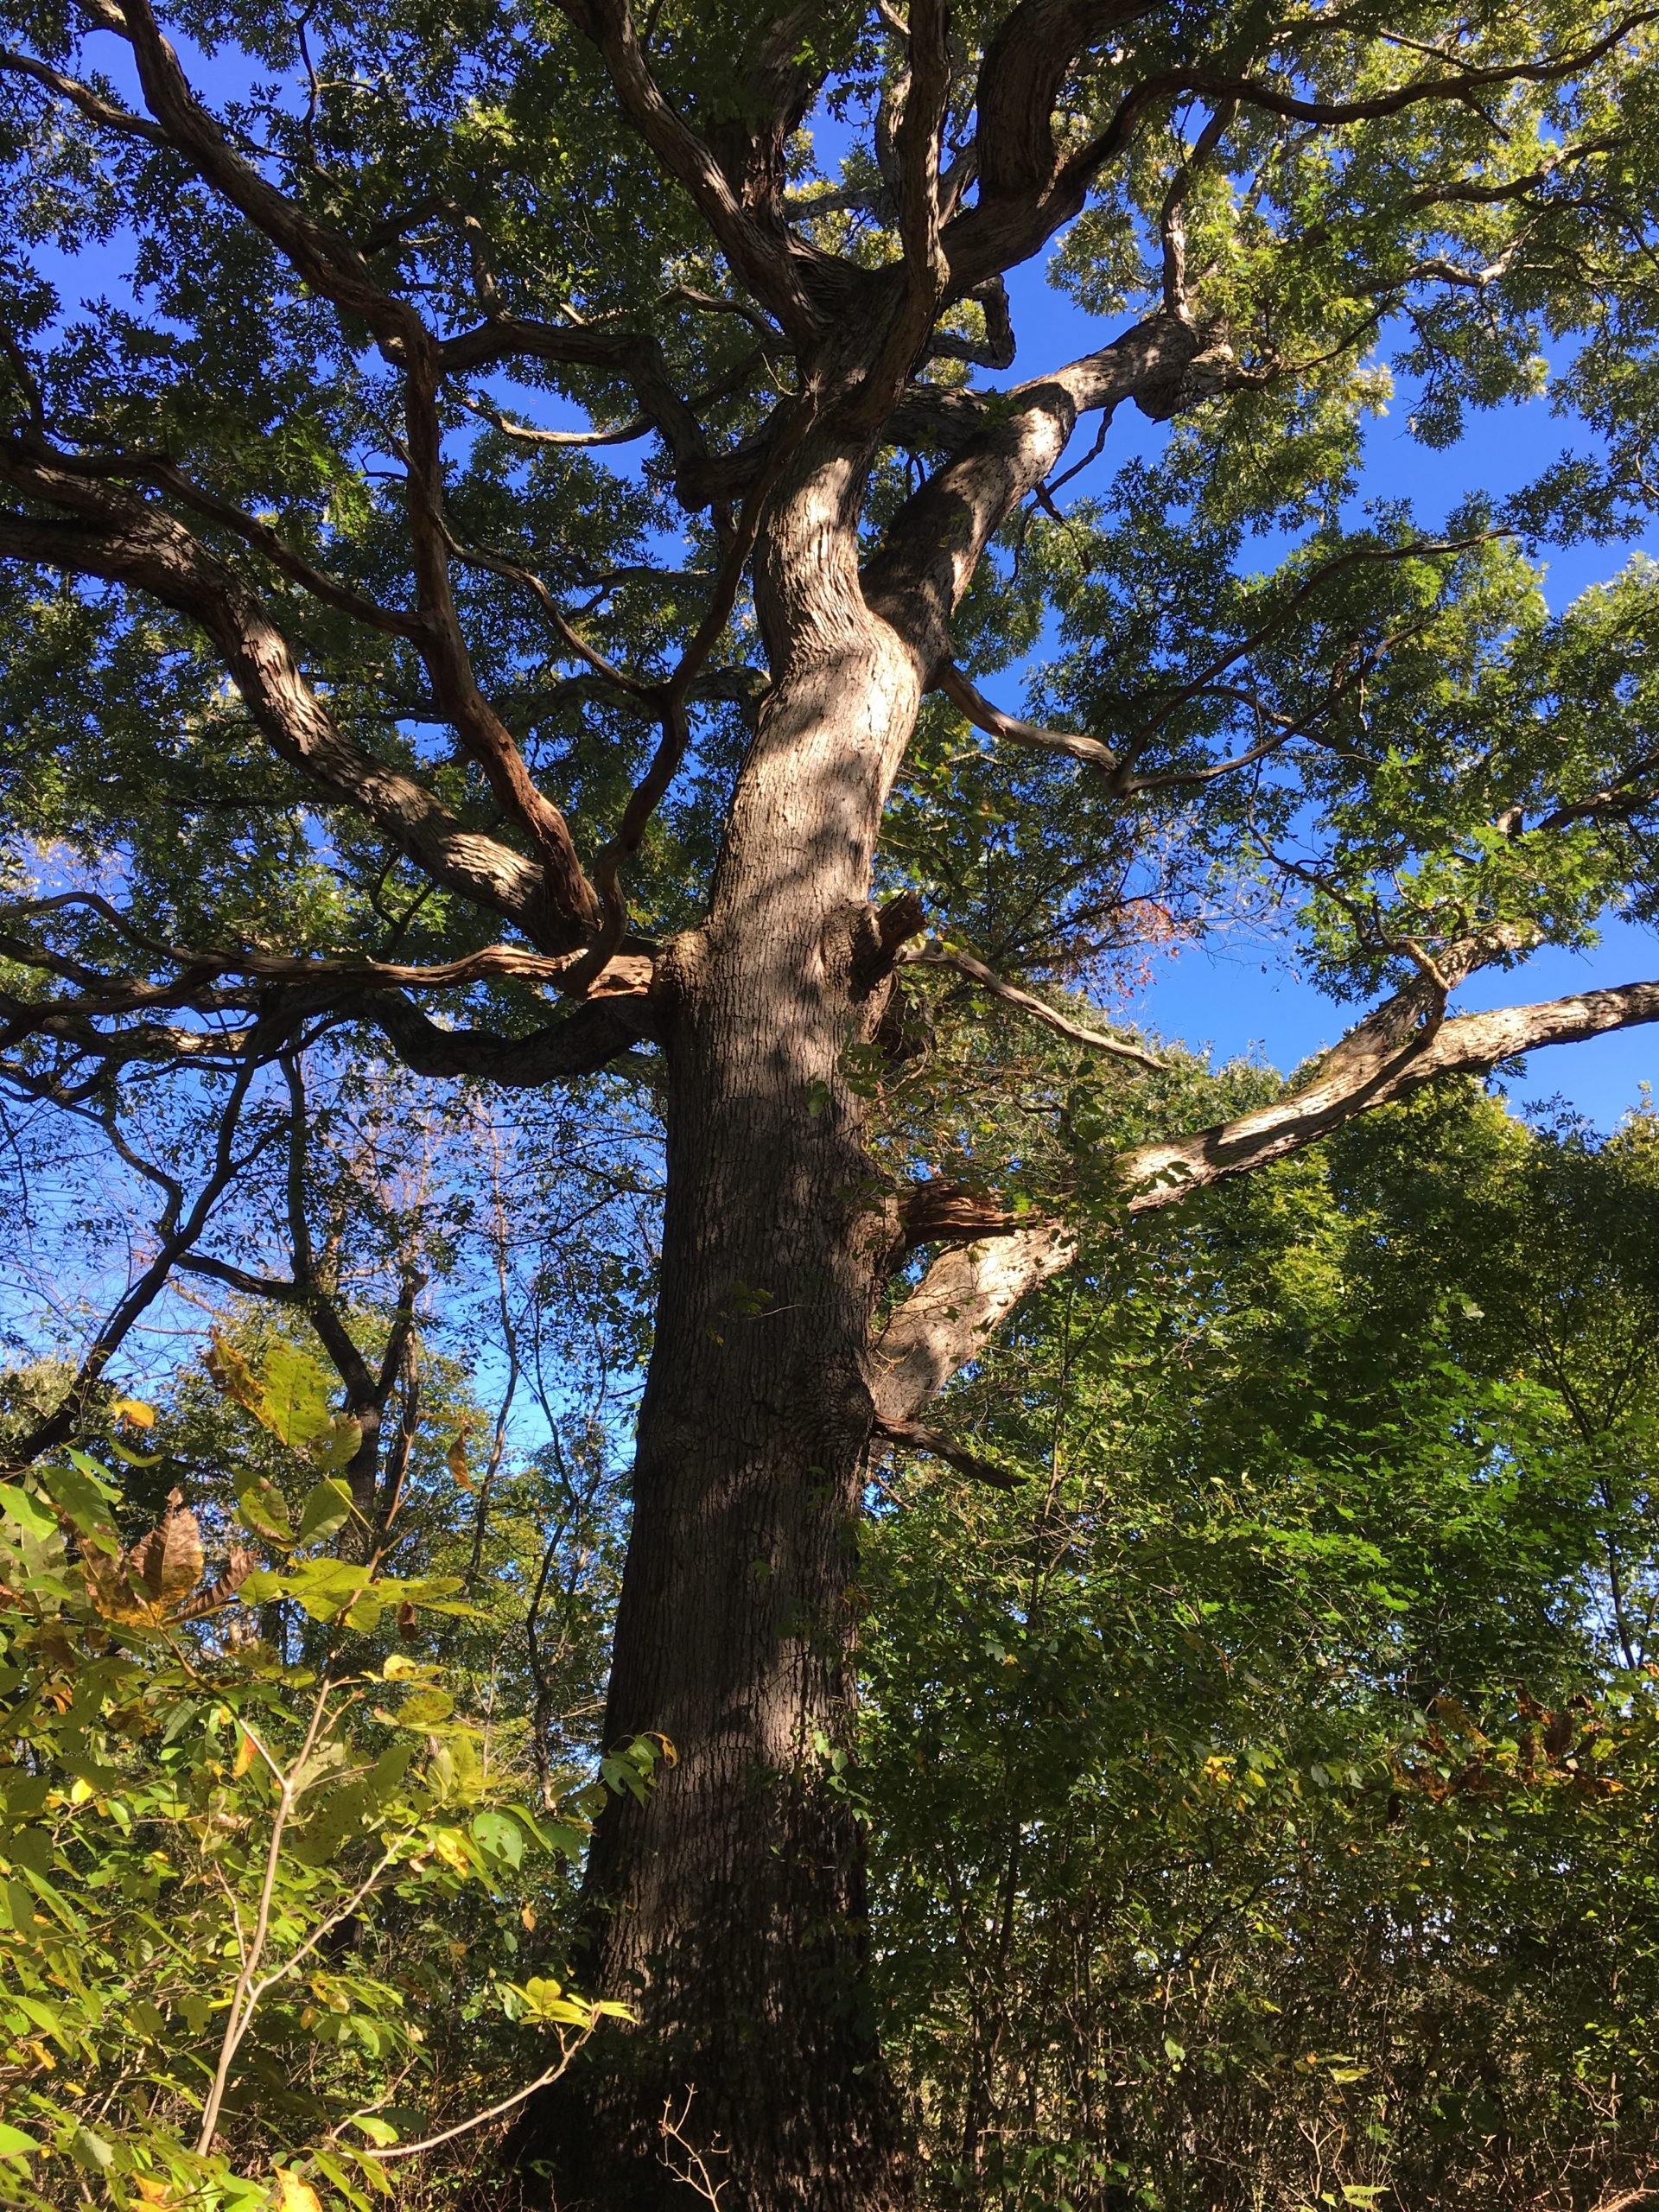 A photo of a tree.